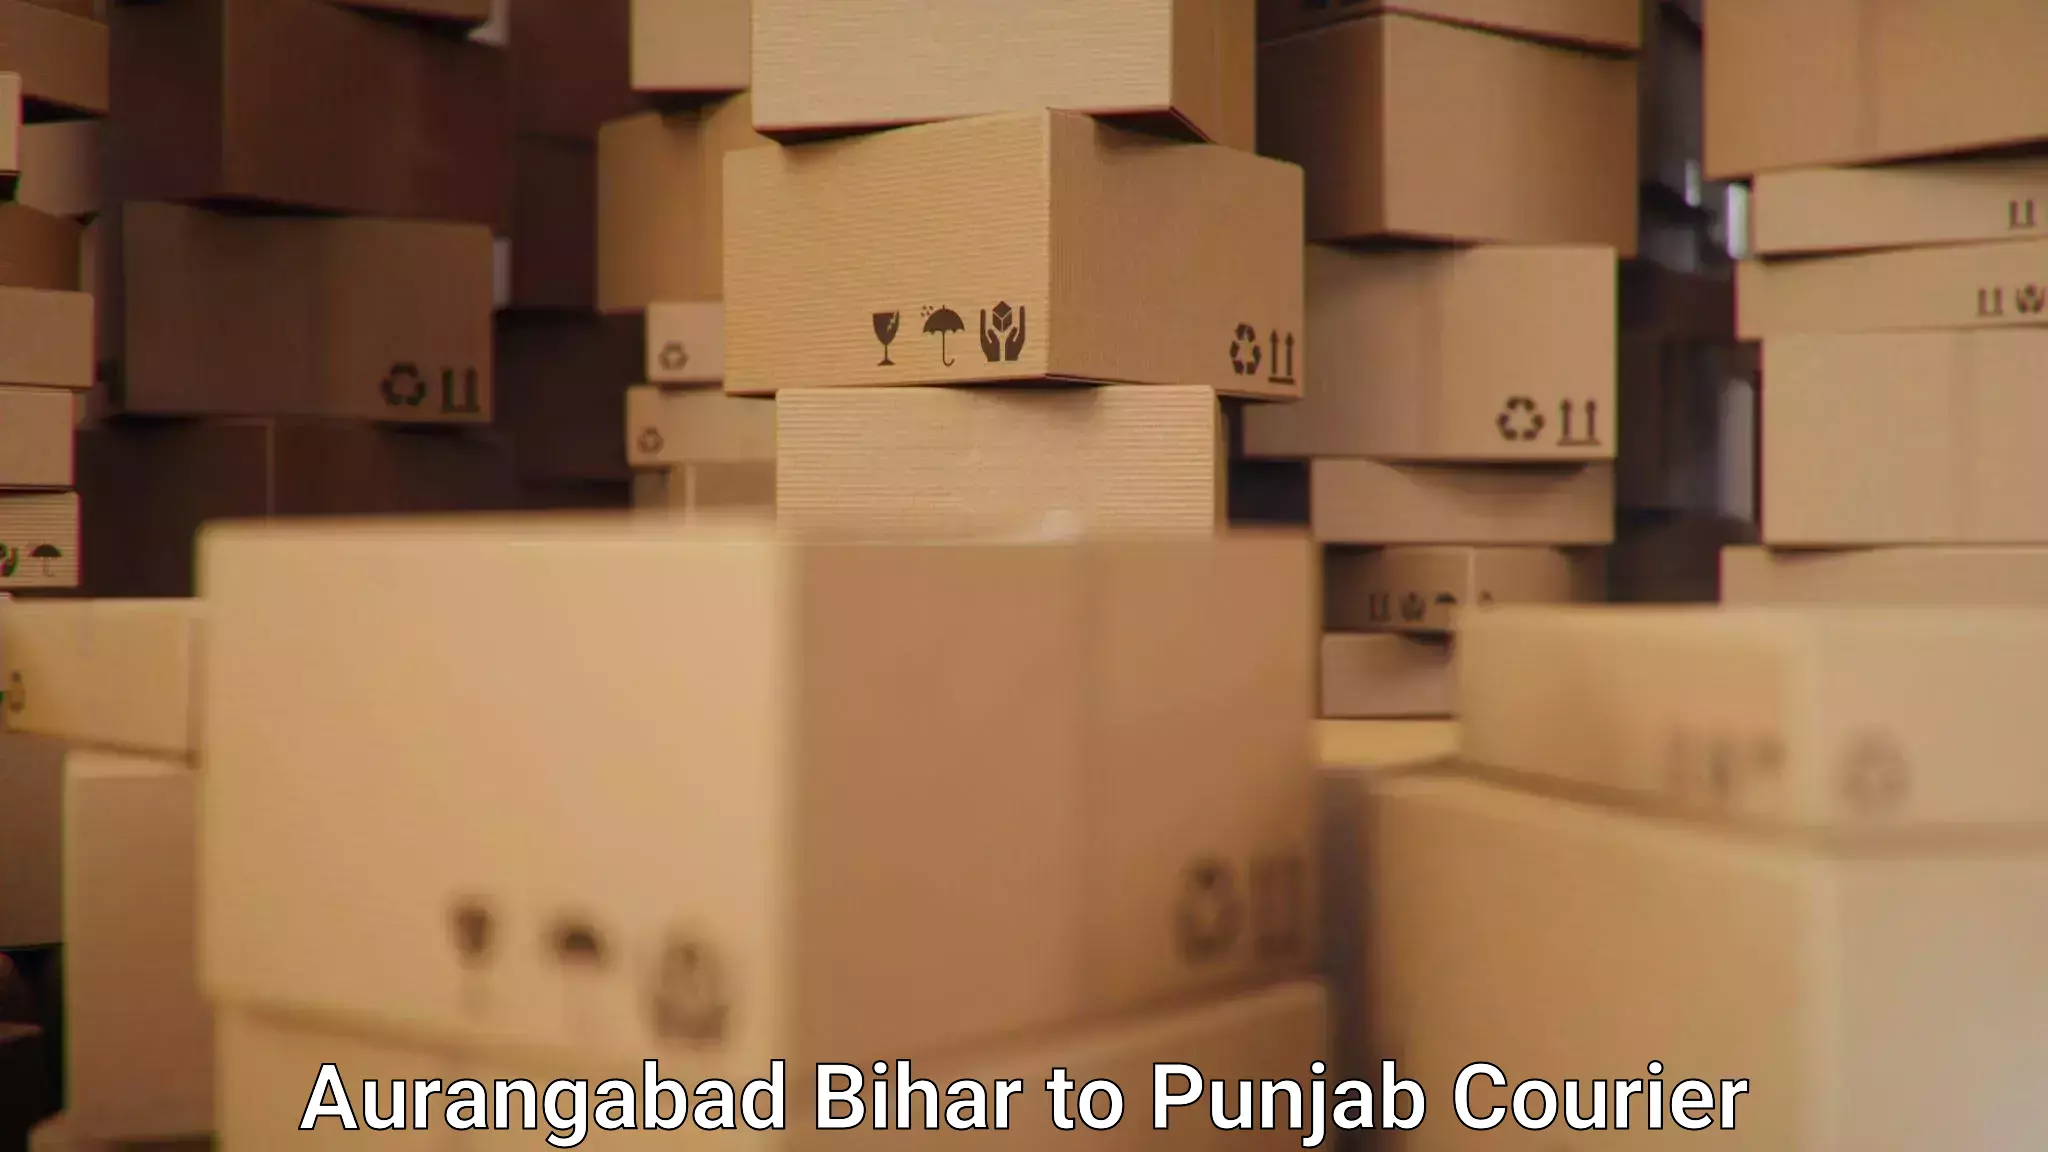 Courier service comparison Aurangabad Bihar to Bagha Purana